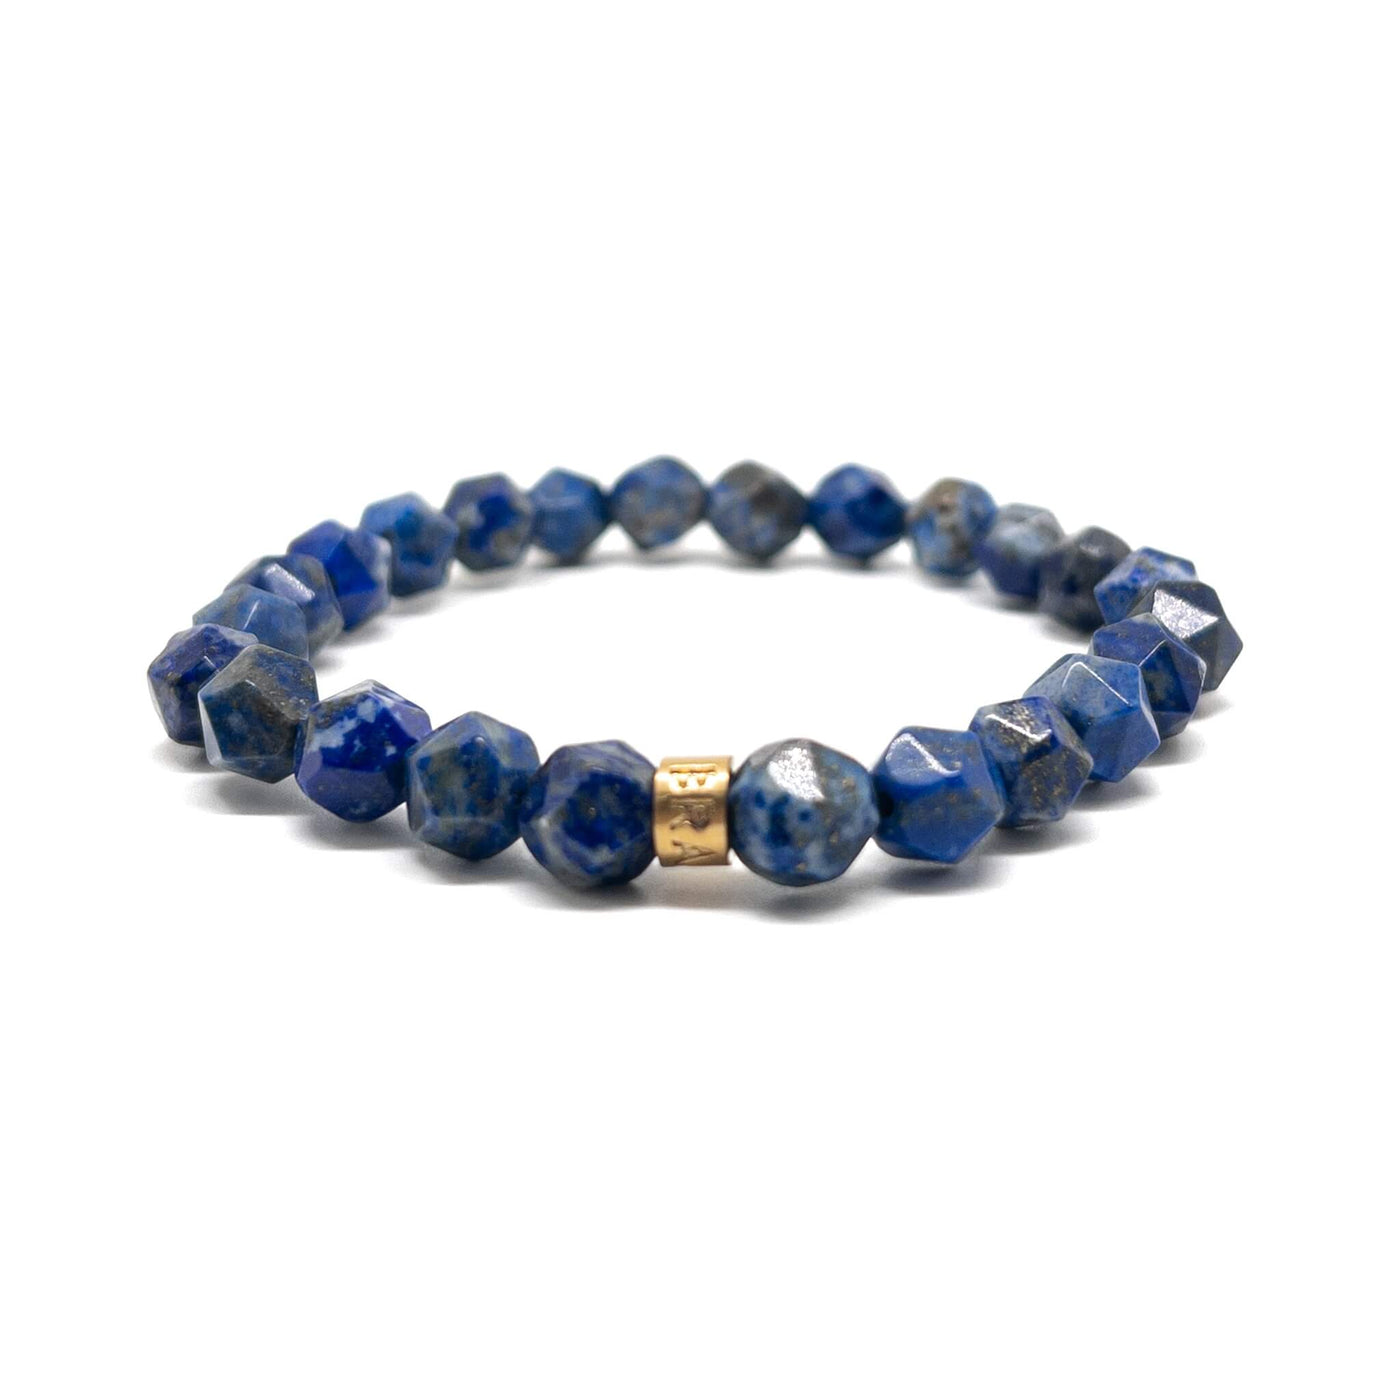 The Full Faceted Lapis Lazuli Signed Bracelet